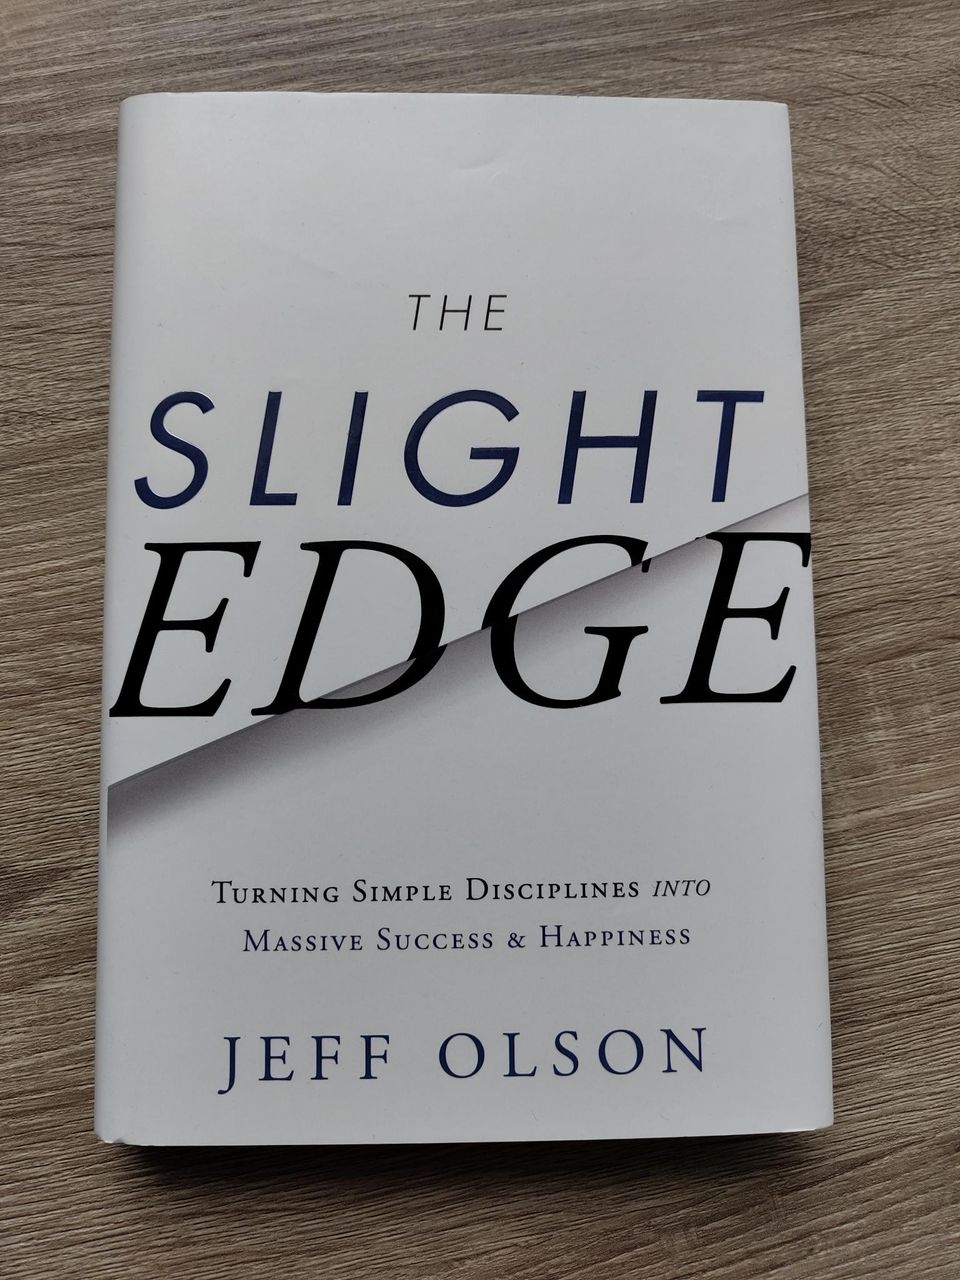 The Slight Edge, Jeff Olson